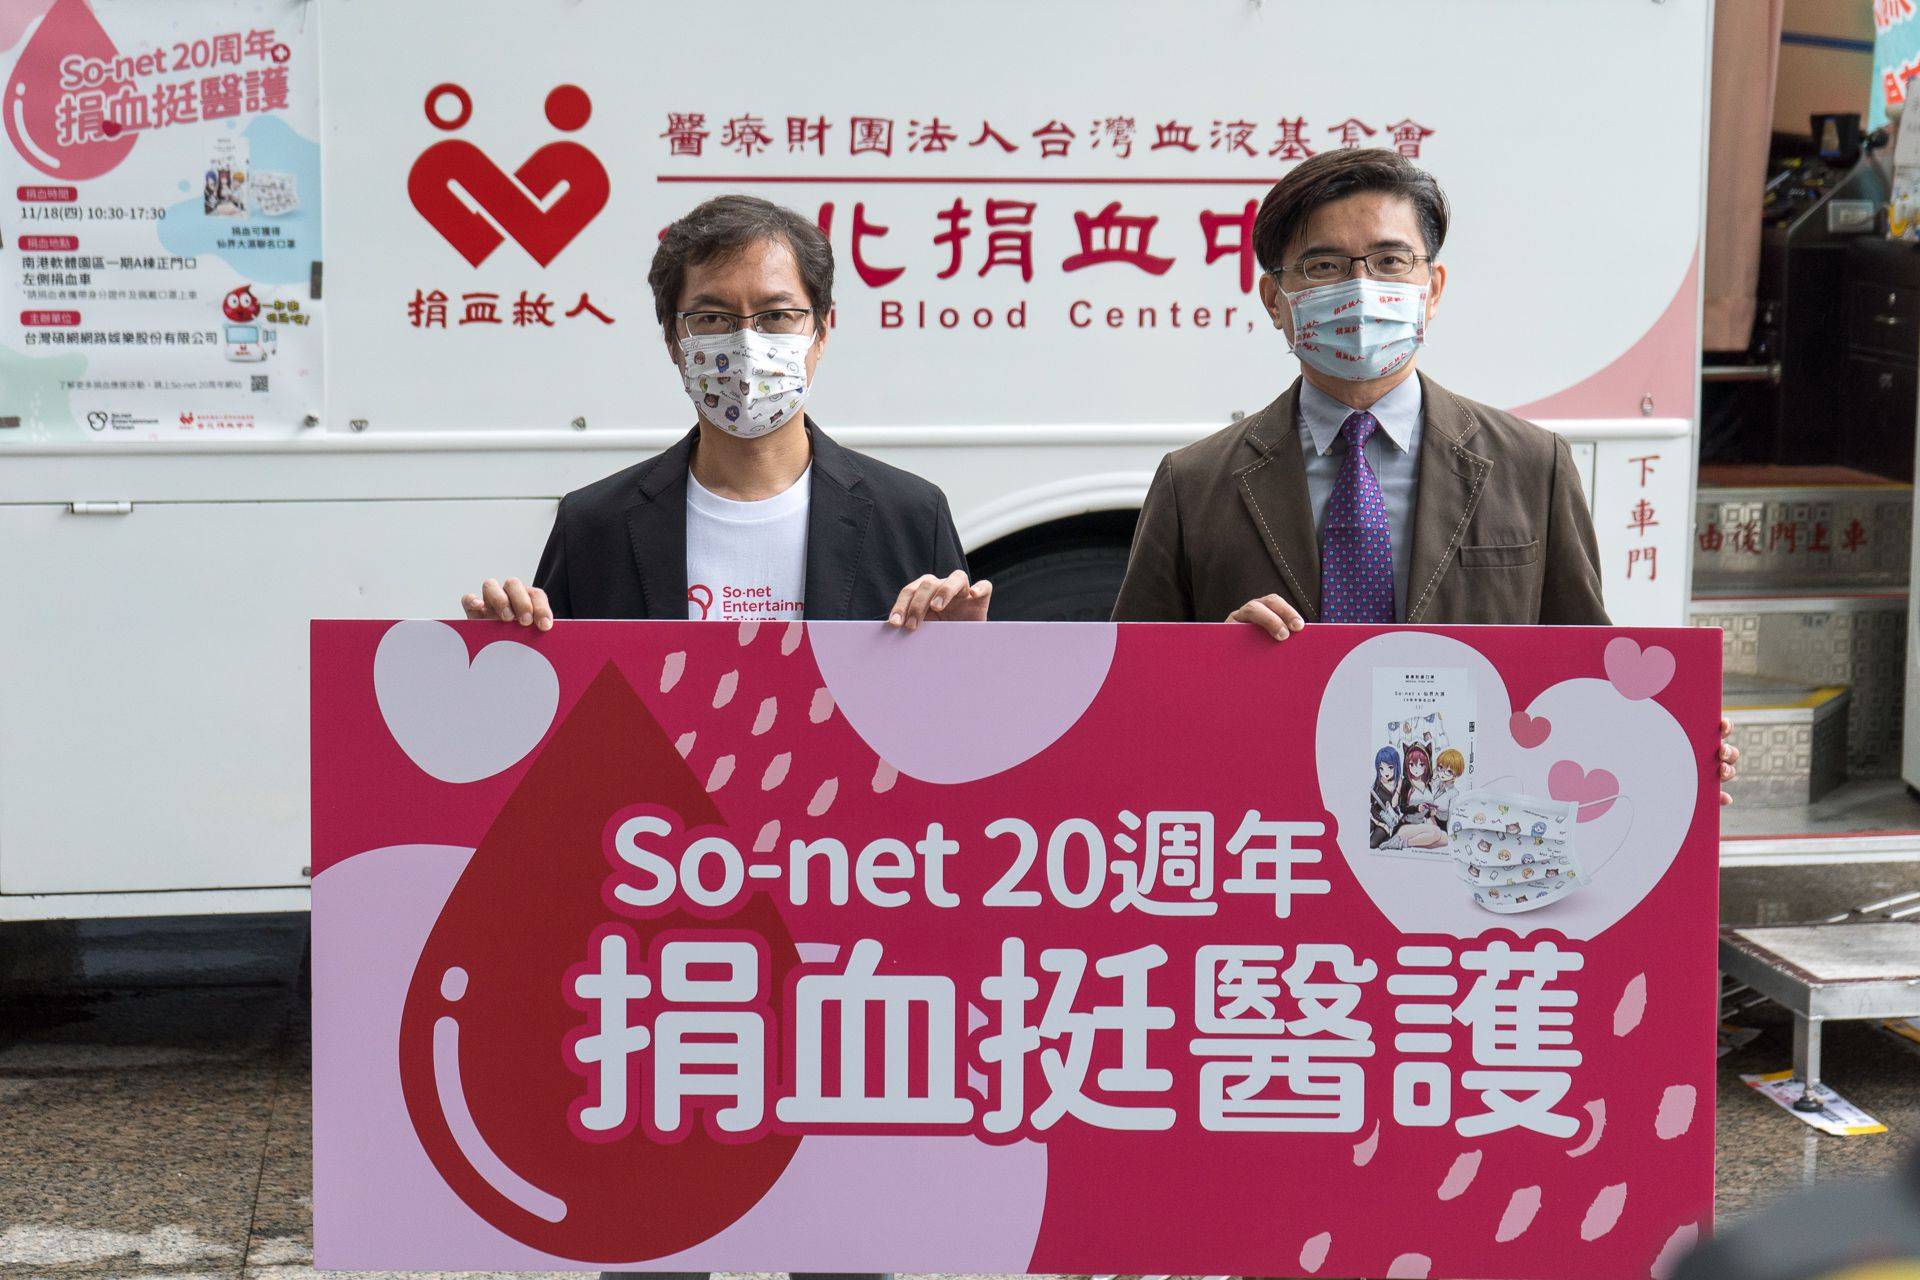 So-net 20週年捐熱血挺醫護 贈仙界大濕聯名口罩 